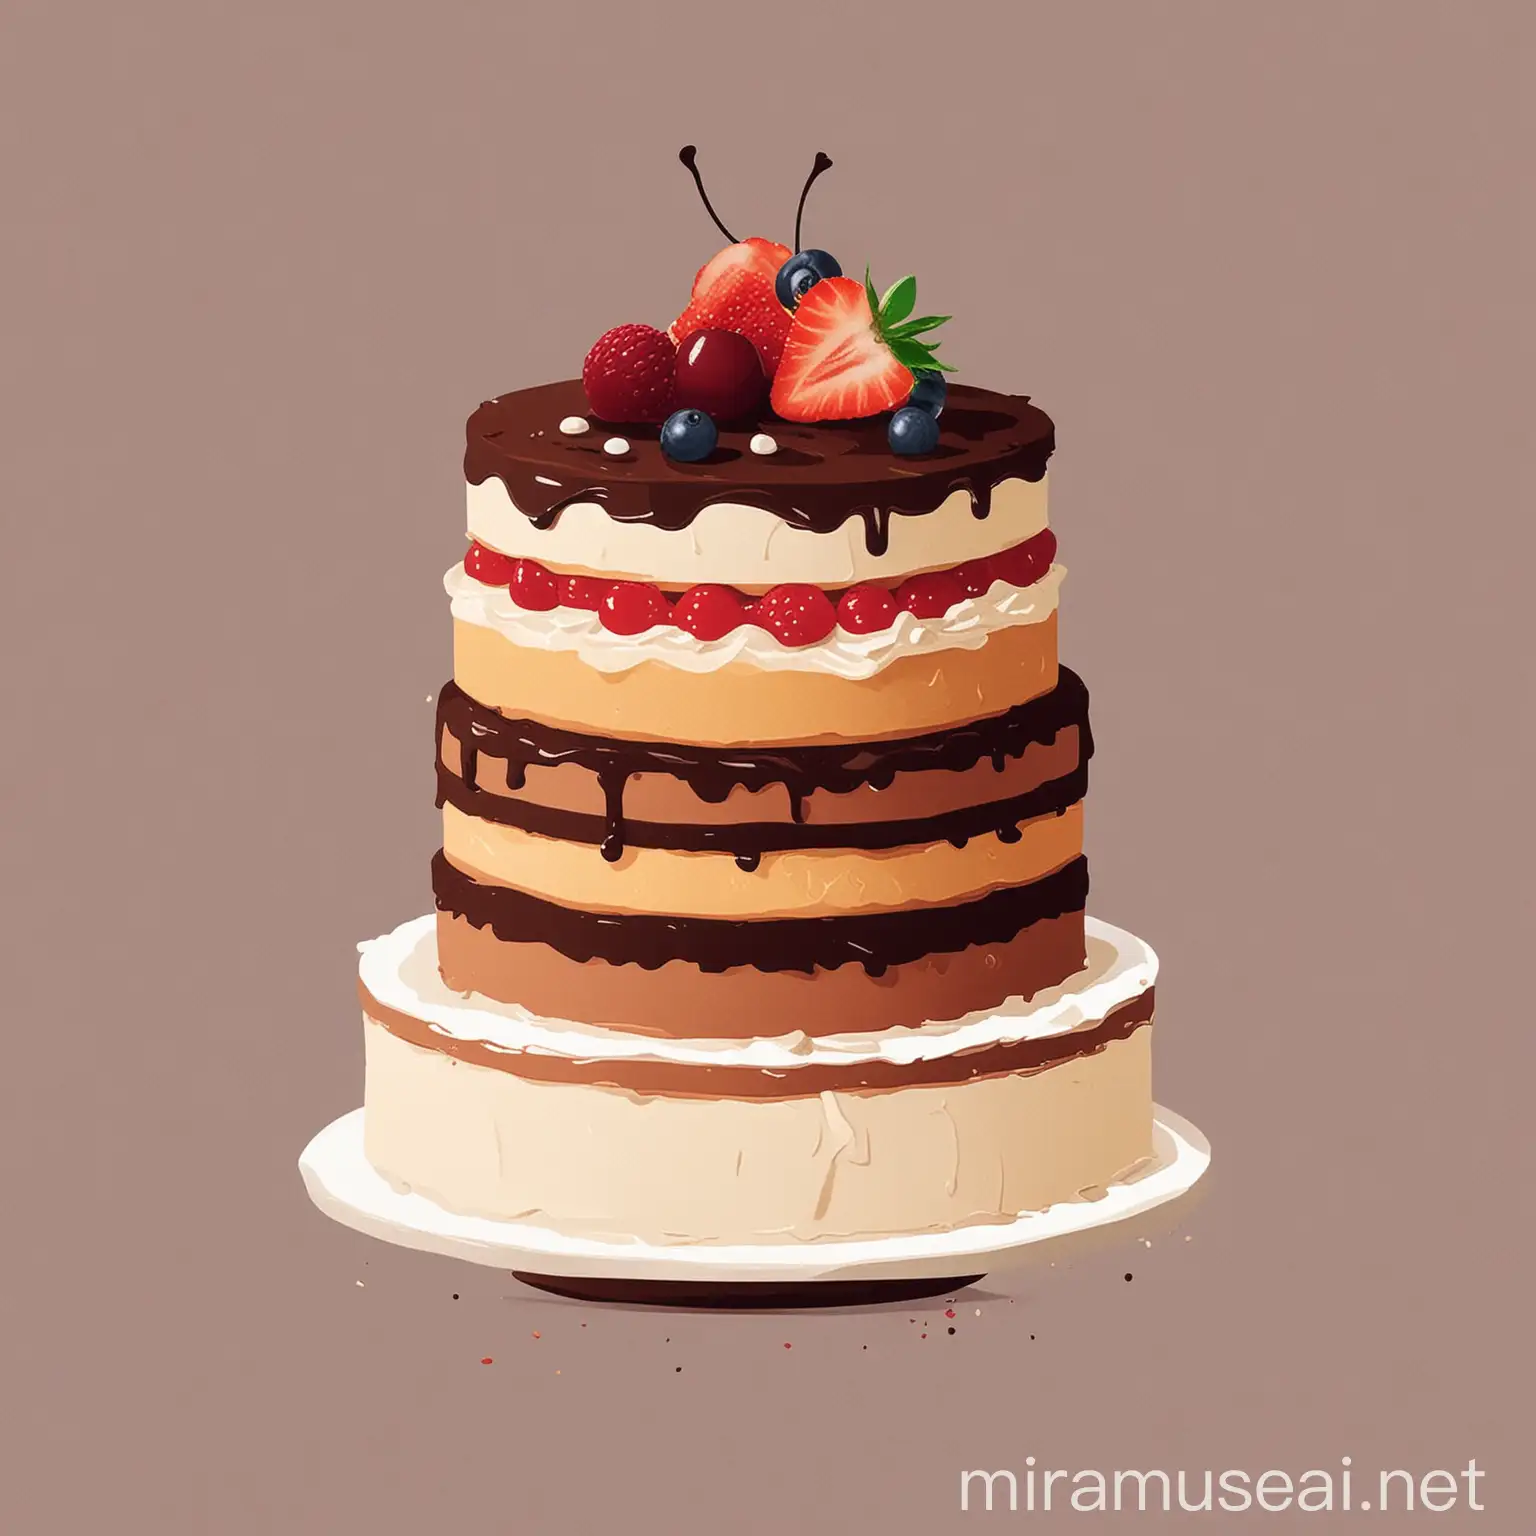 create a minimal illustration of a three layer cake